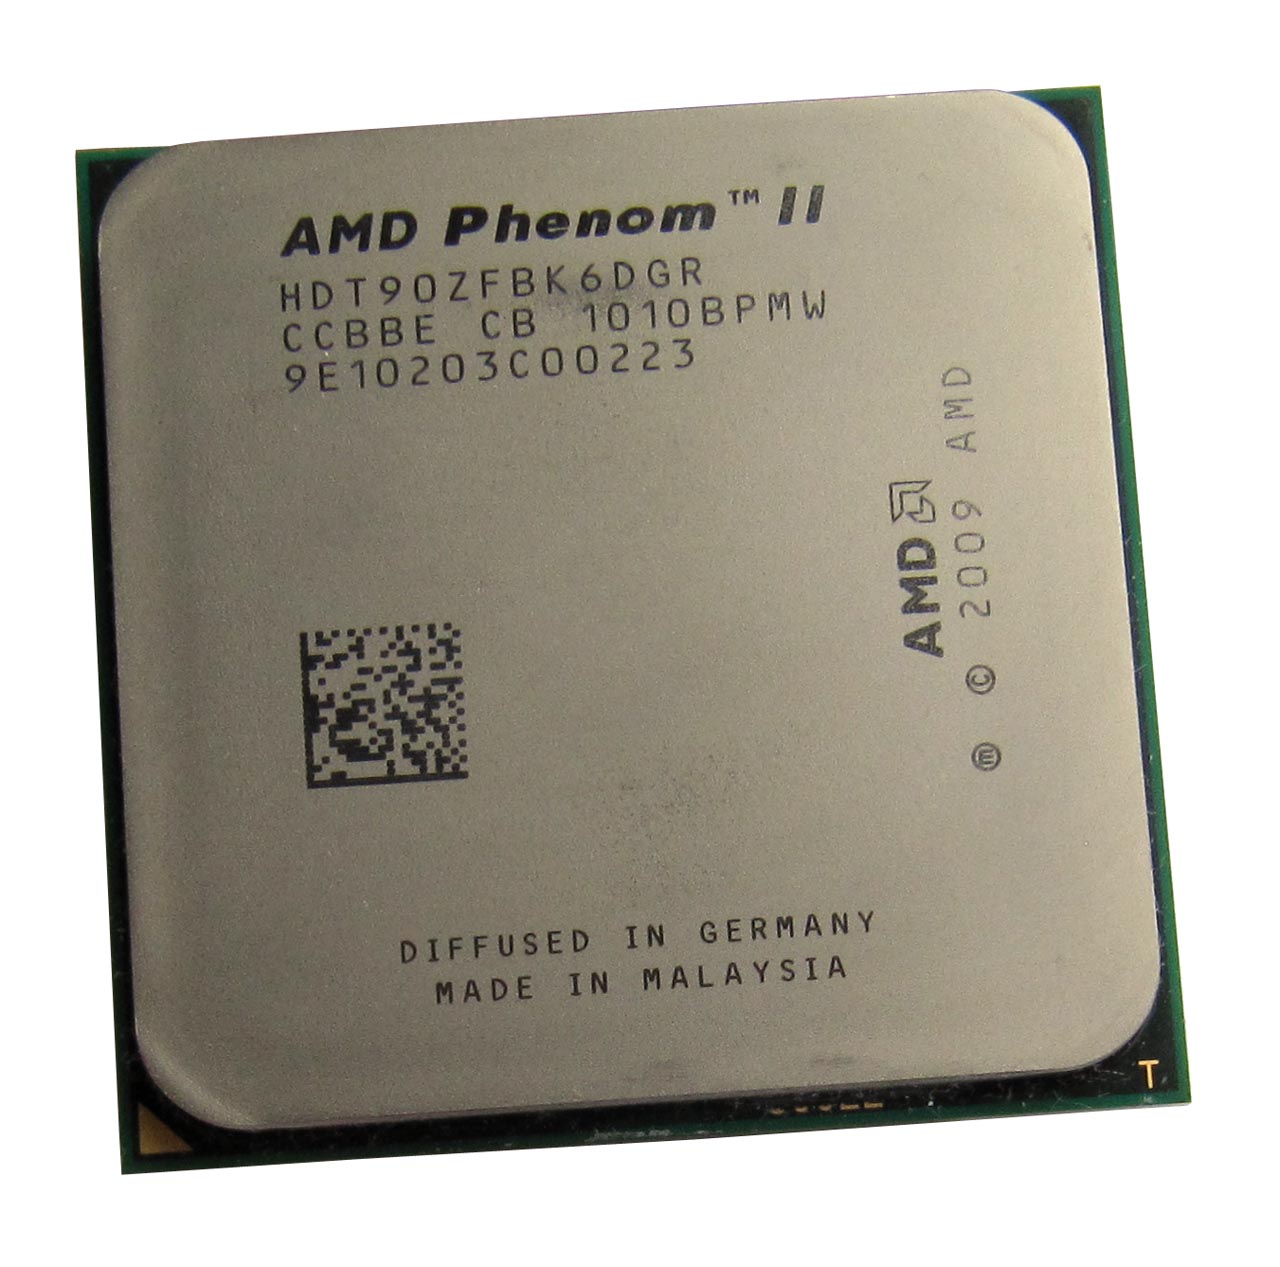 Amd phenom tm ii x6 processor. AMD Athlon II x2 260. Процессор AMD Athlon adx2600ck. Процессор AMD Athlon x4 845. AMD Athlon(TM) x2 260 Processor 3 20 GHZ.